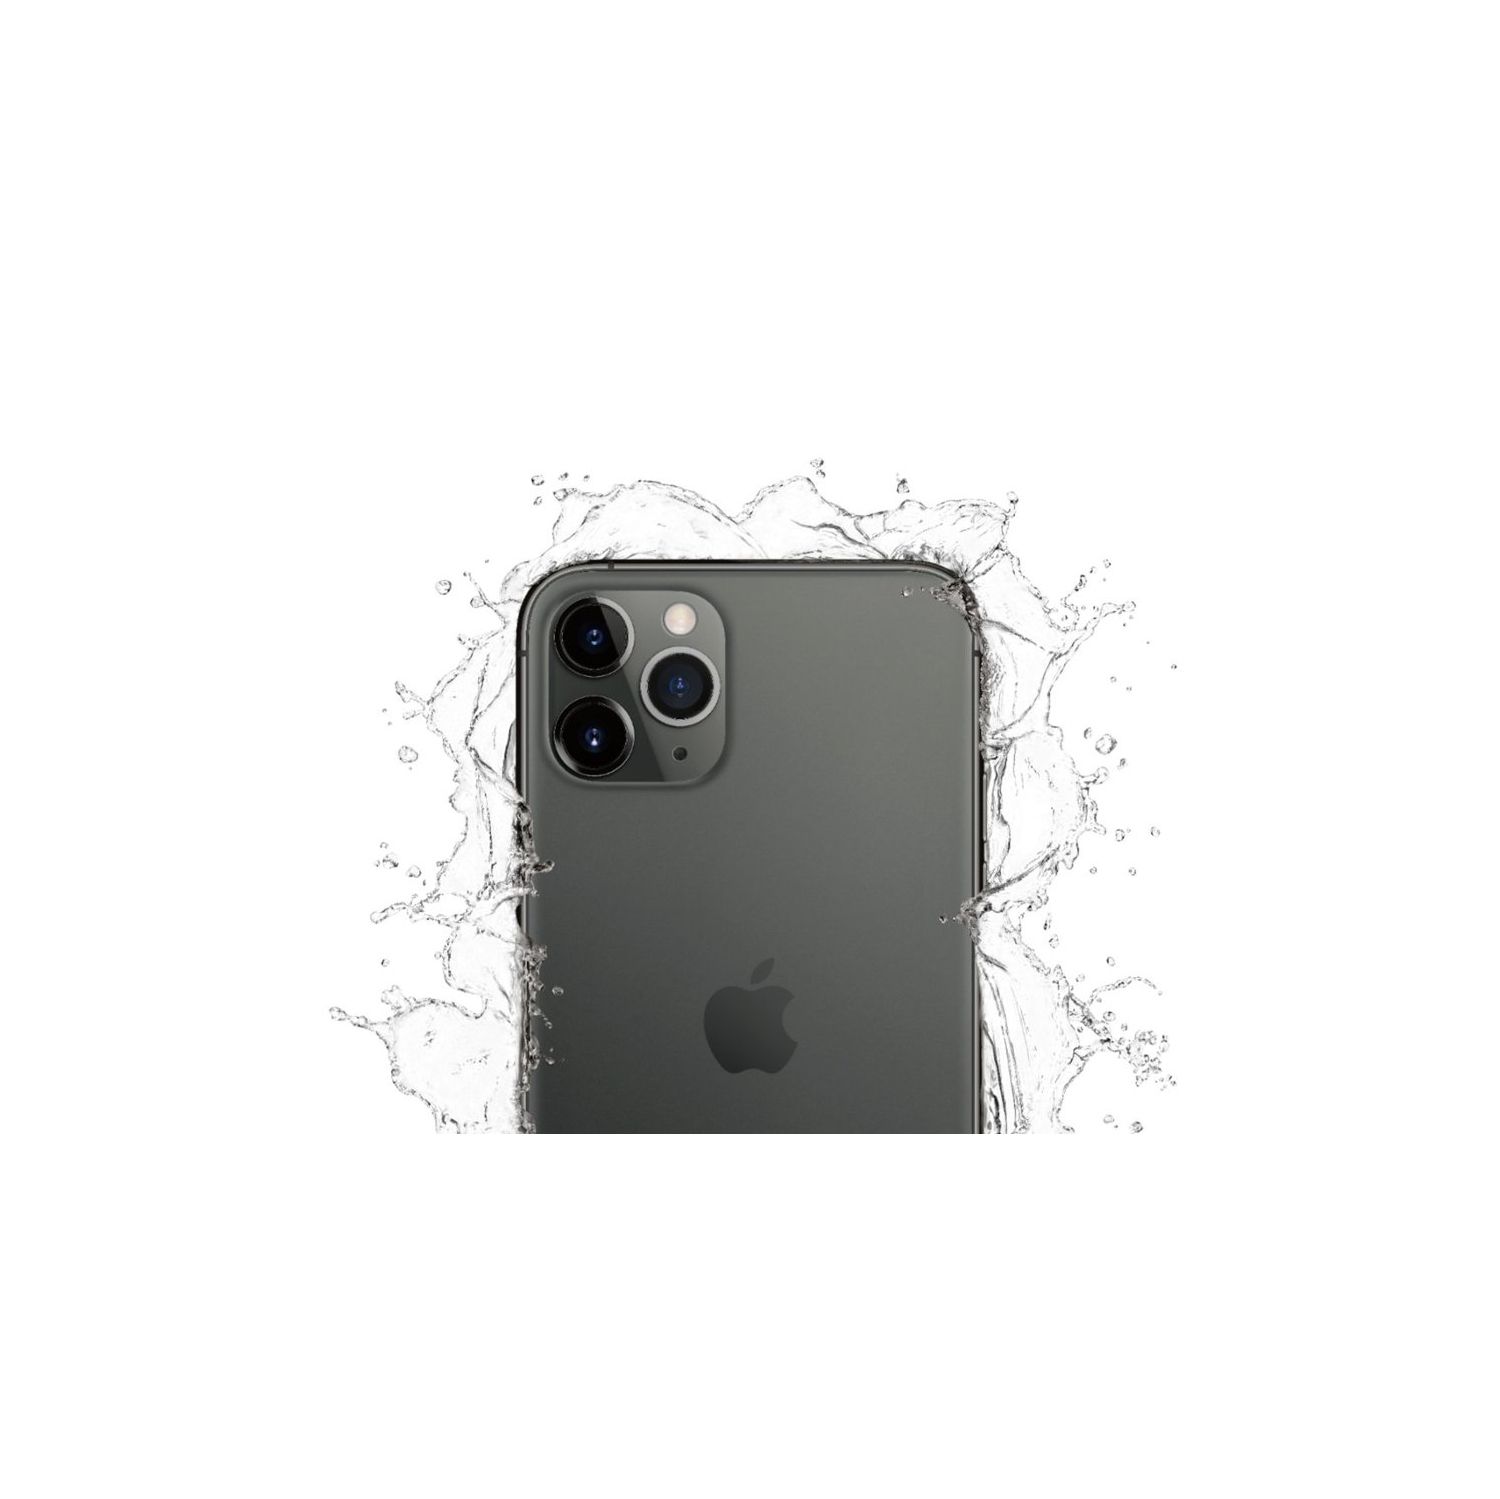 Refurbished (Excellent) - Apple iPhone 11 Pro 256GB Smartphone